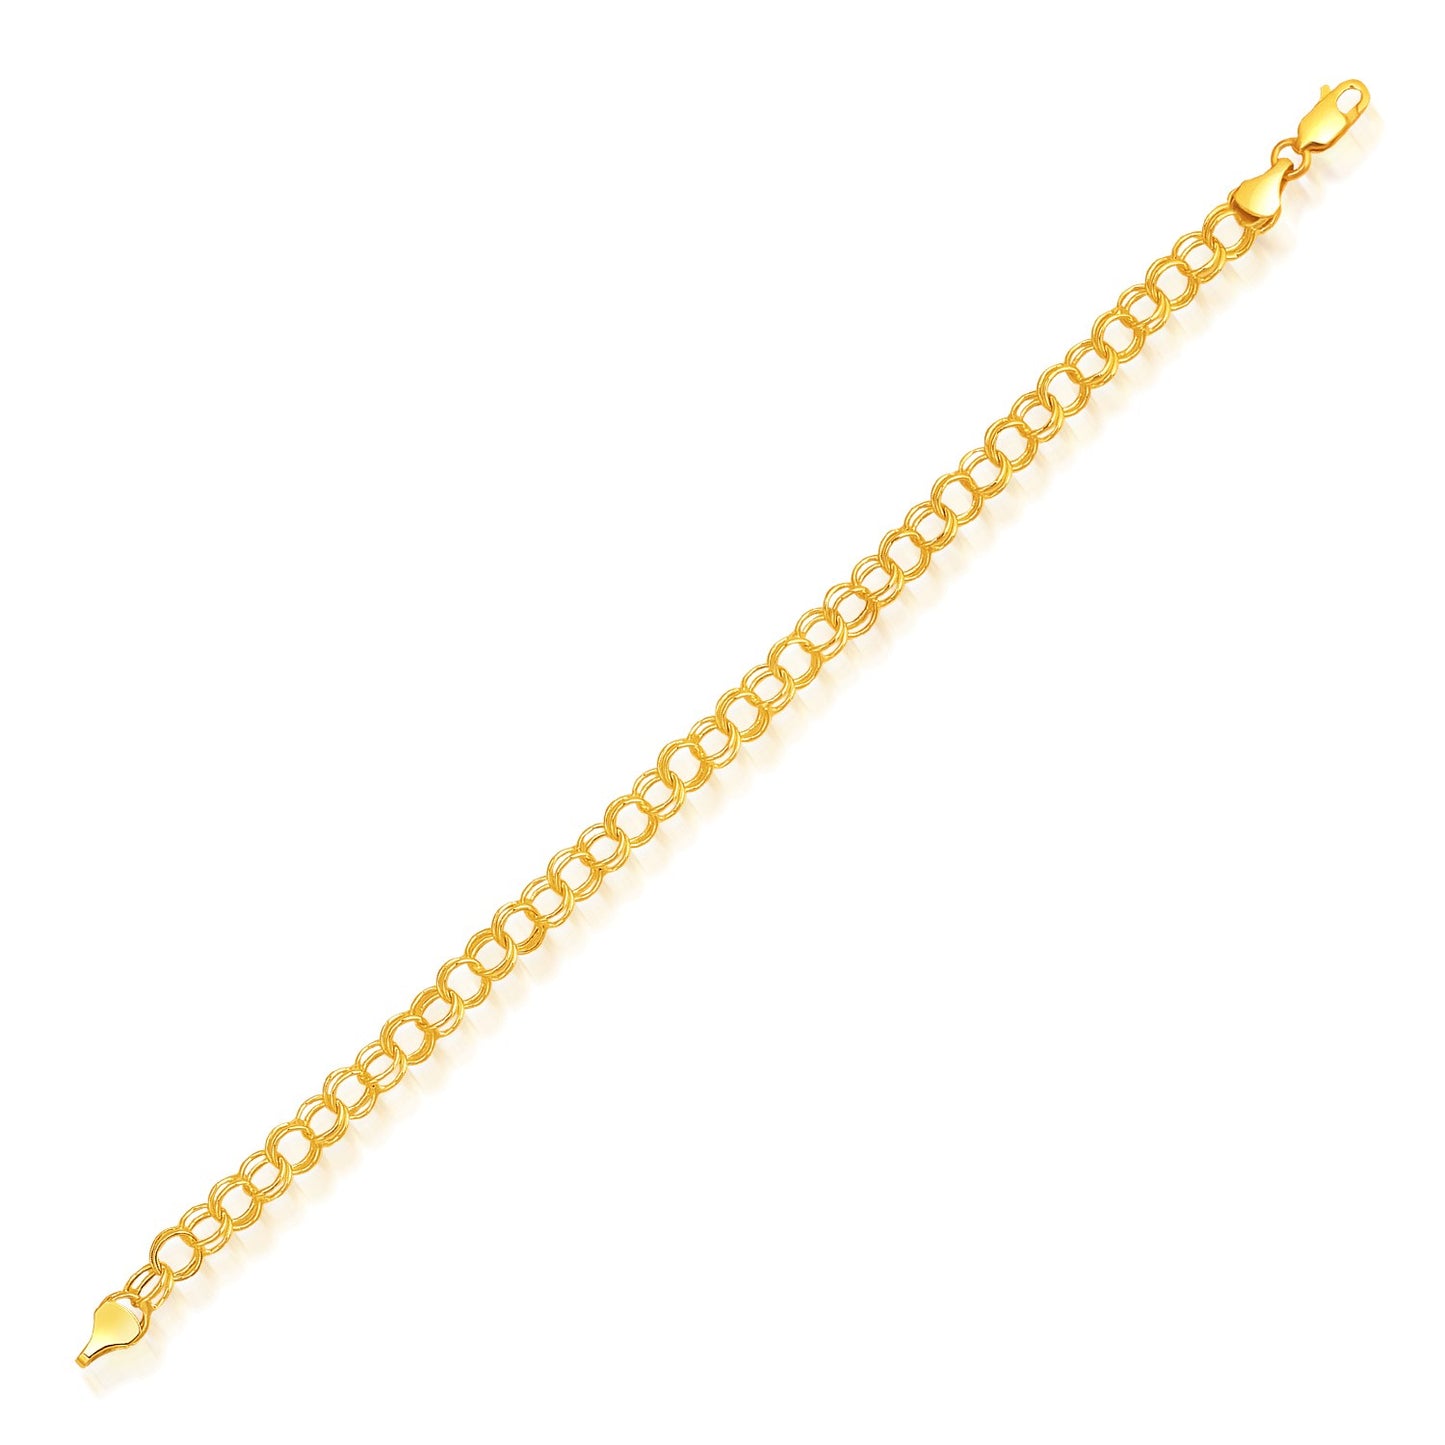 5.0 mm 14k Yellow Gold Lite Charm Bracelet